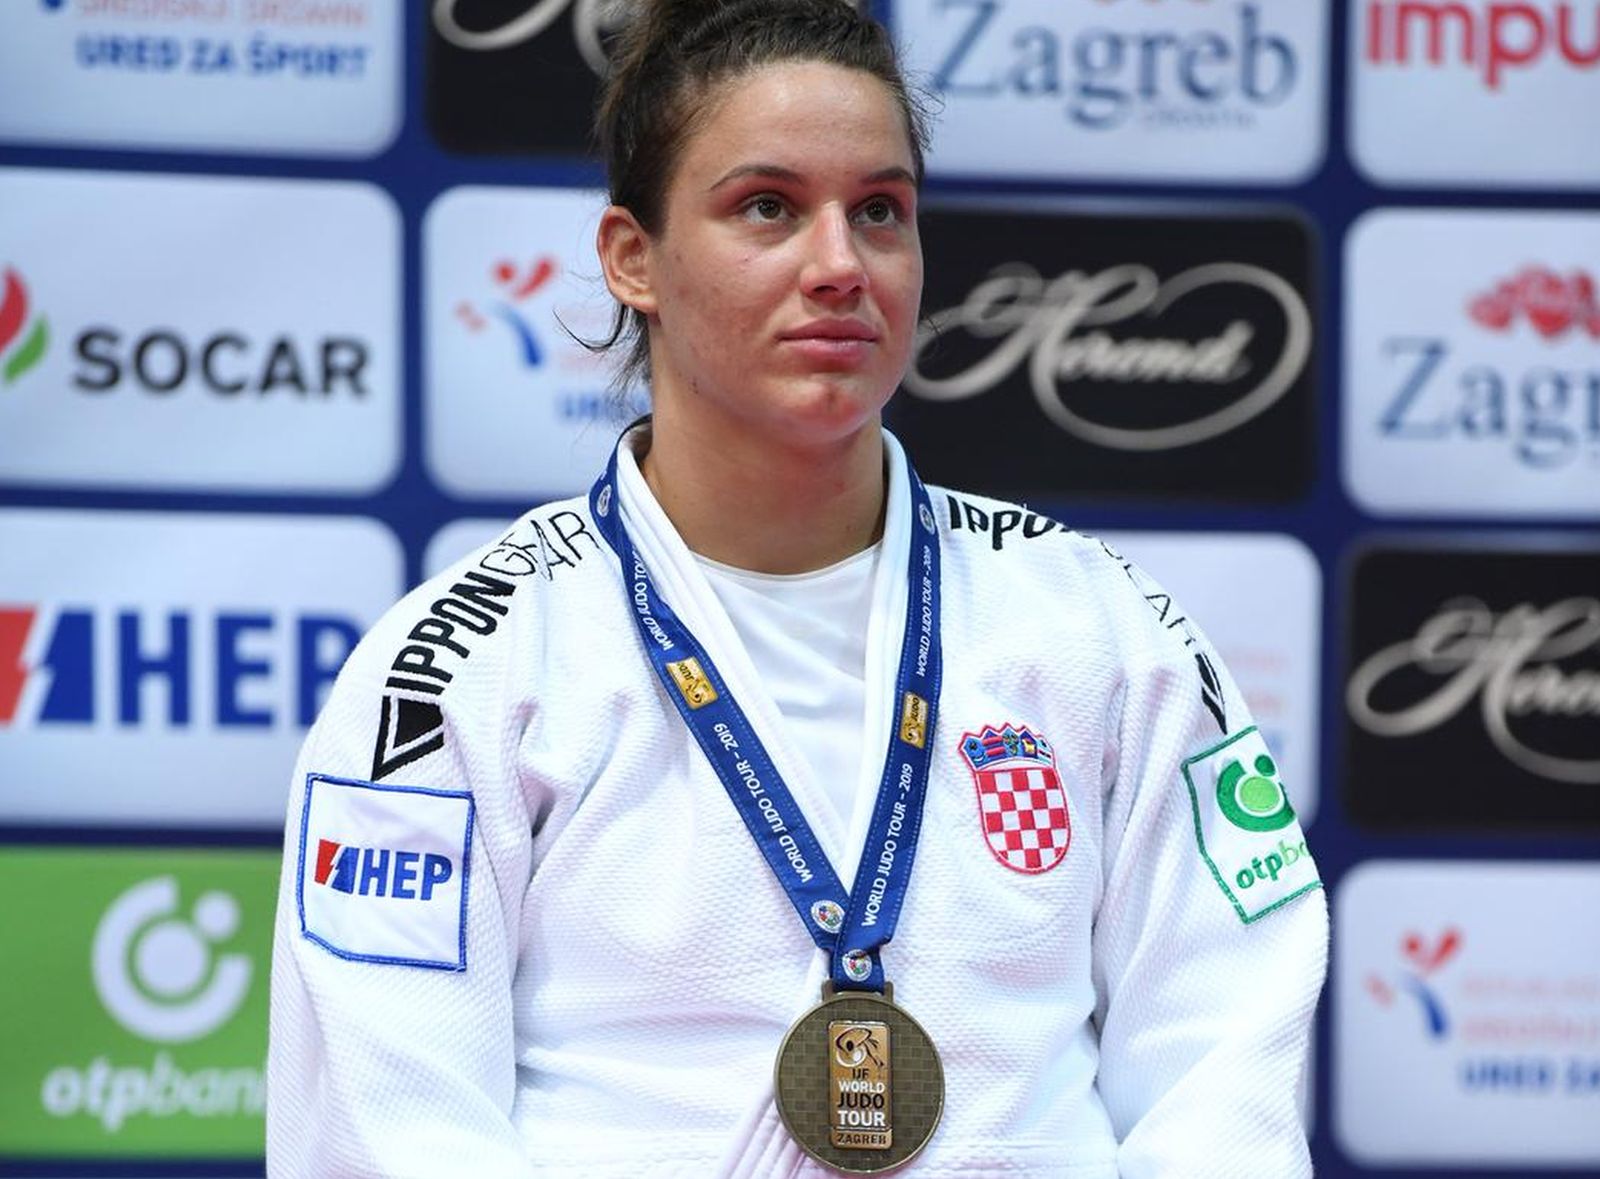 28.07.2019. Zagreb - U Domu sportova odrzava se IJF Judo Grand Prix Zagreb 2019. Prodan Karla  Photo: Josip Regovic/PIXSELL